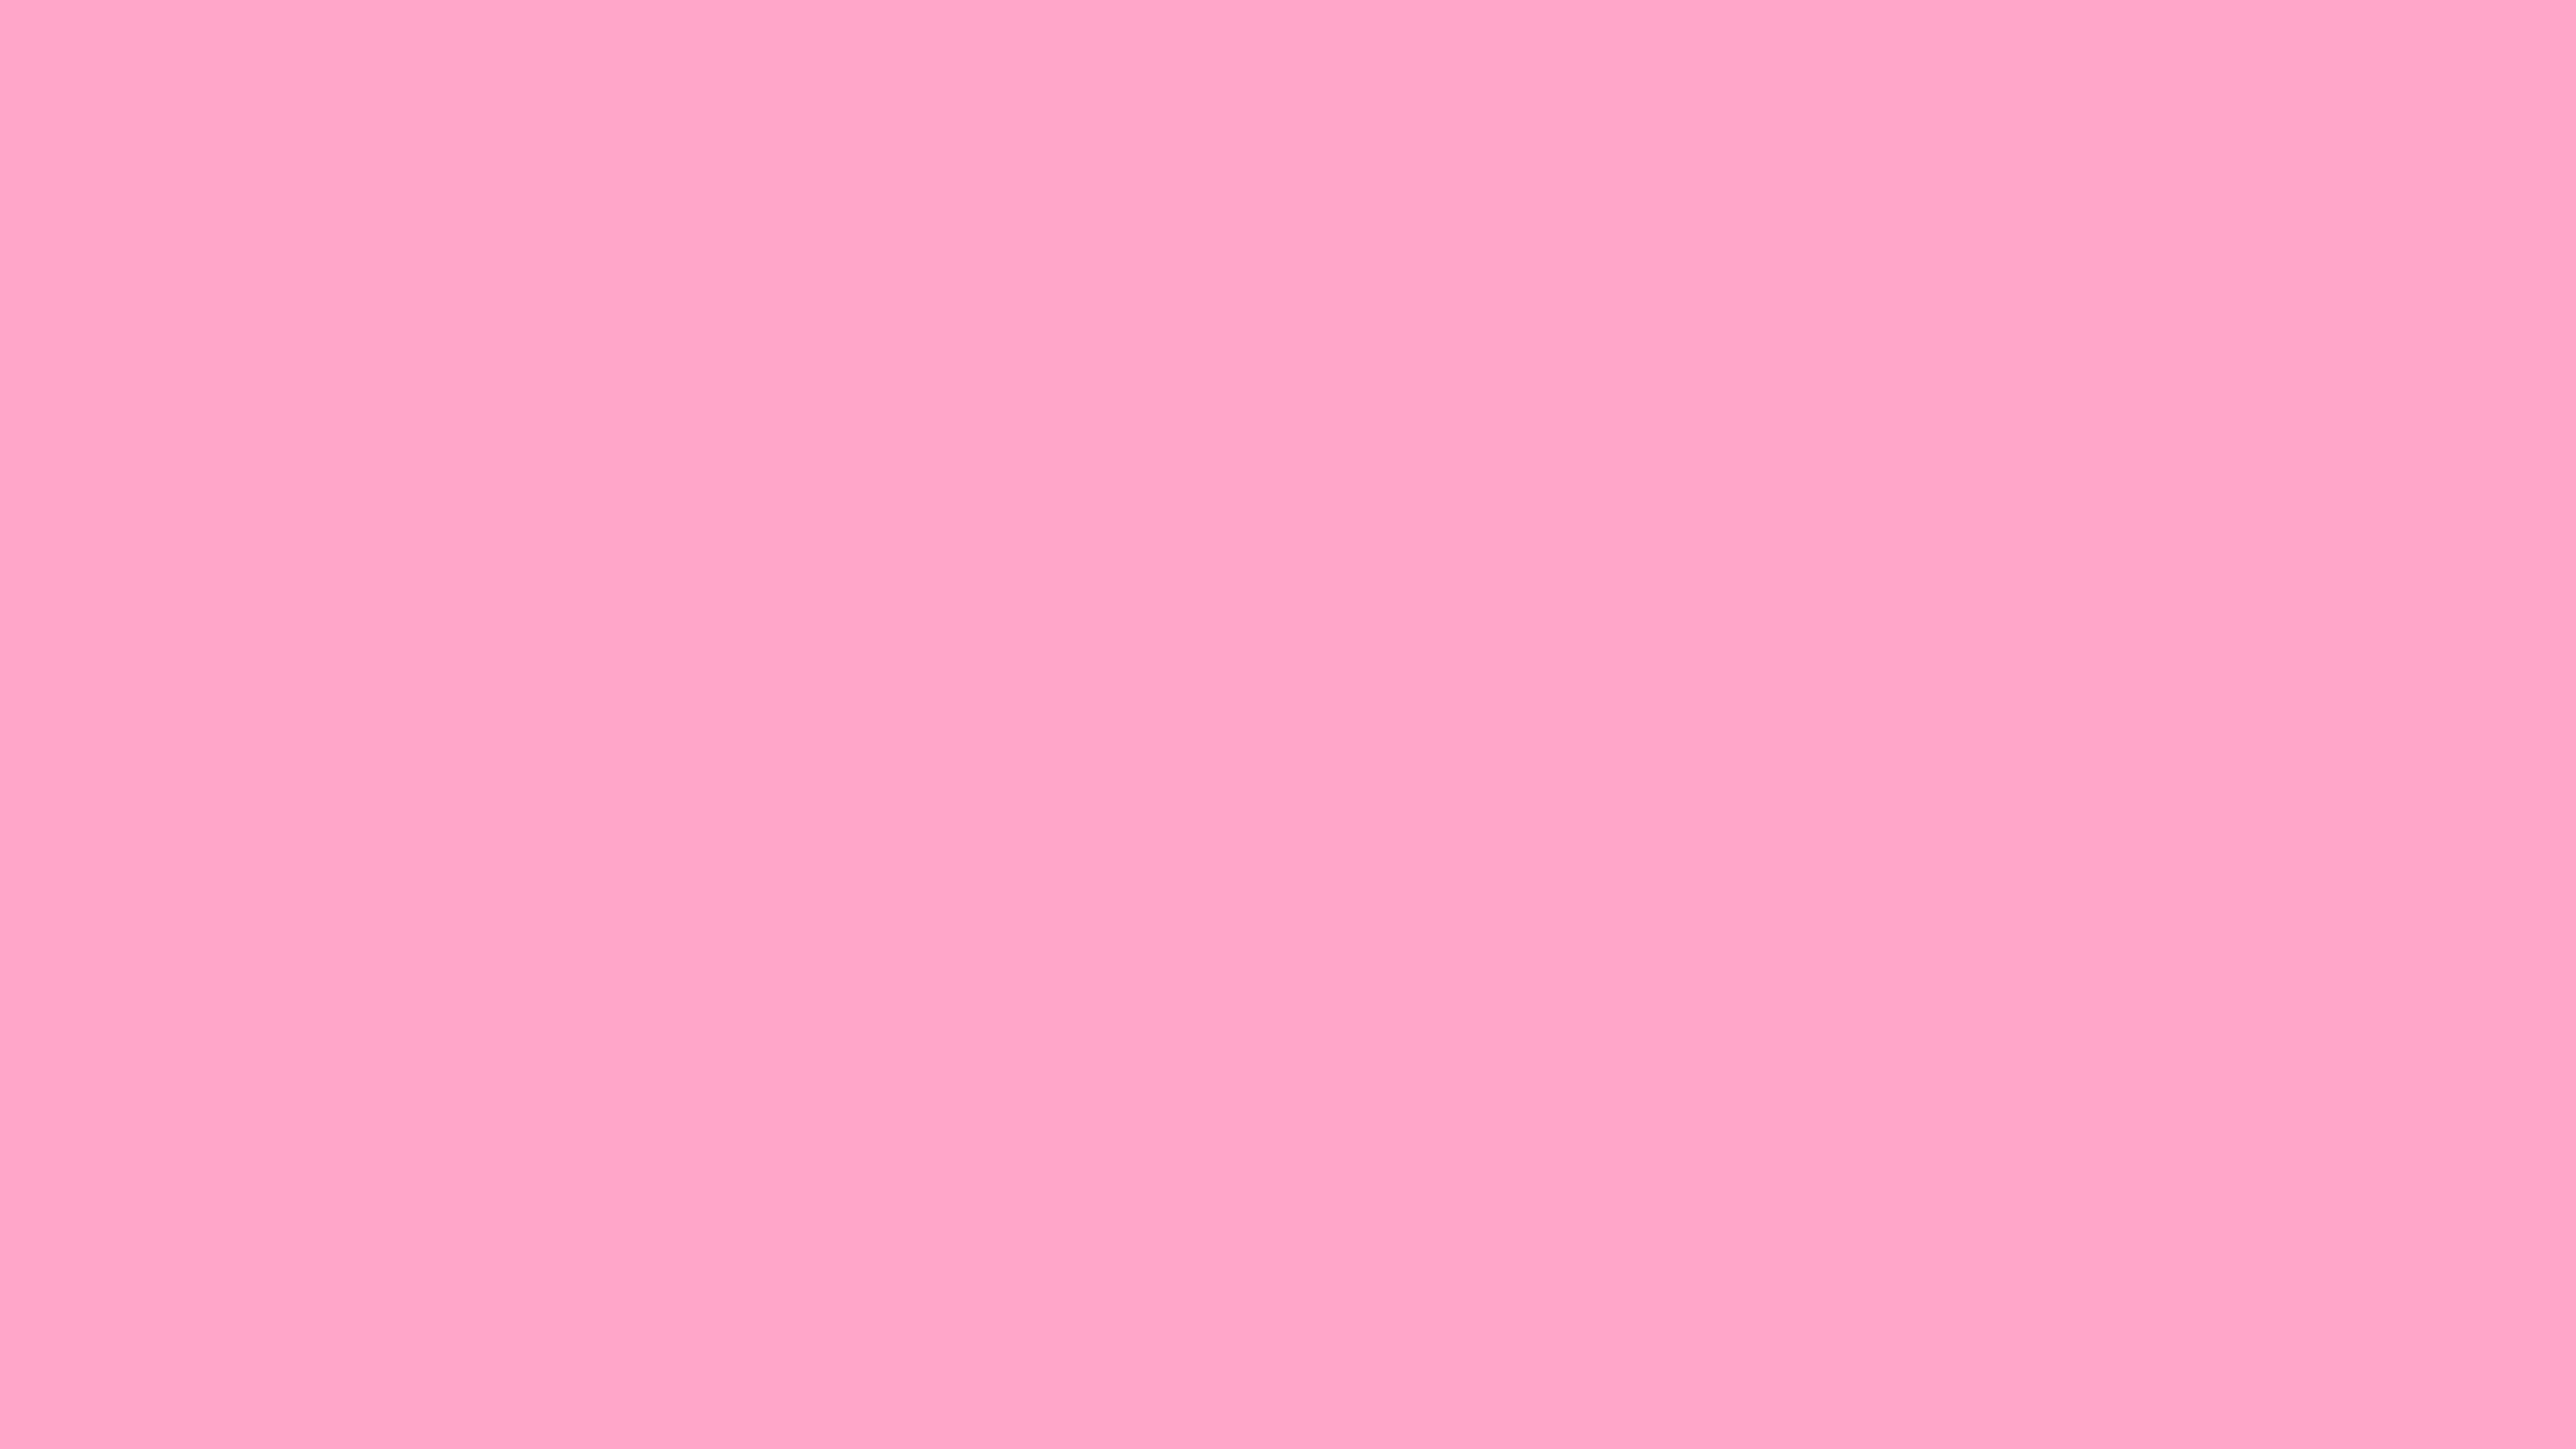 7680x4320 Carnation Pink Solid Color Background